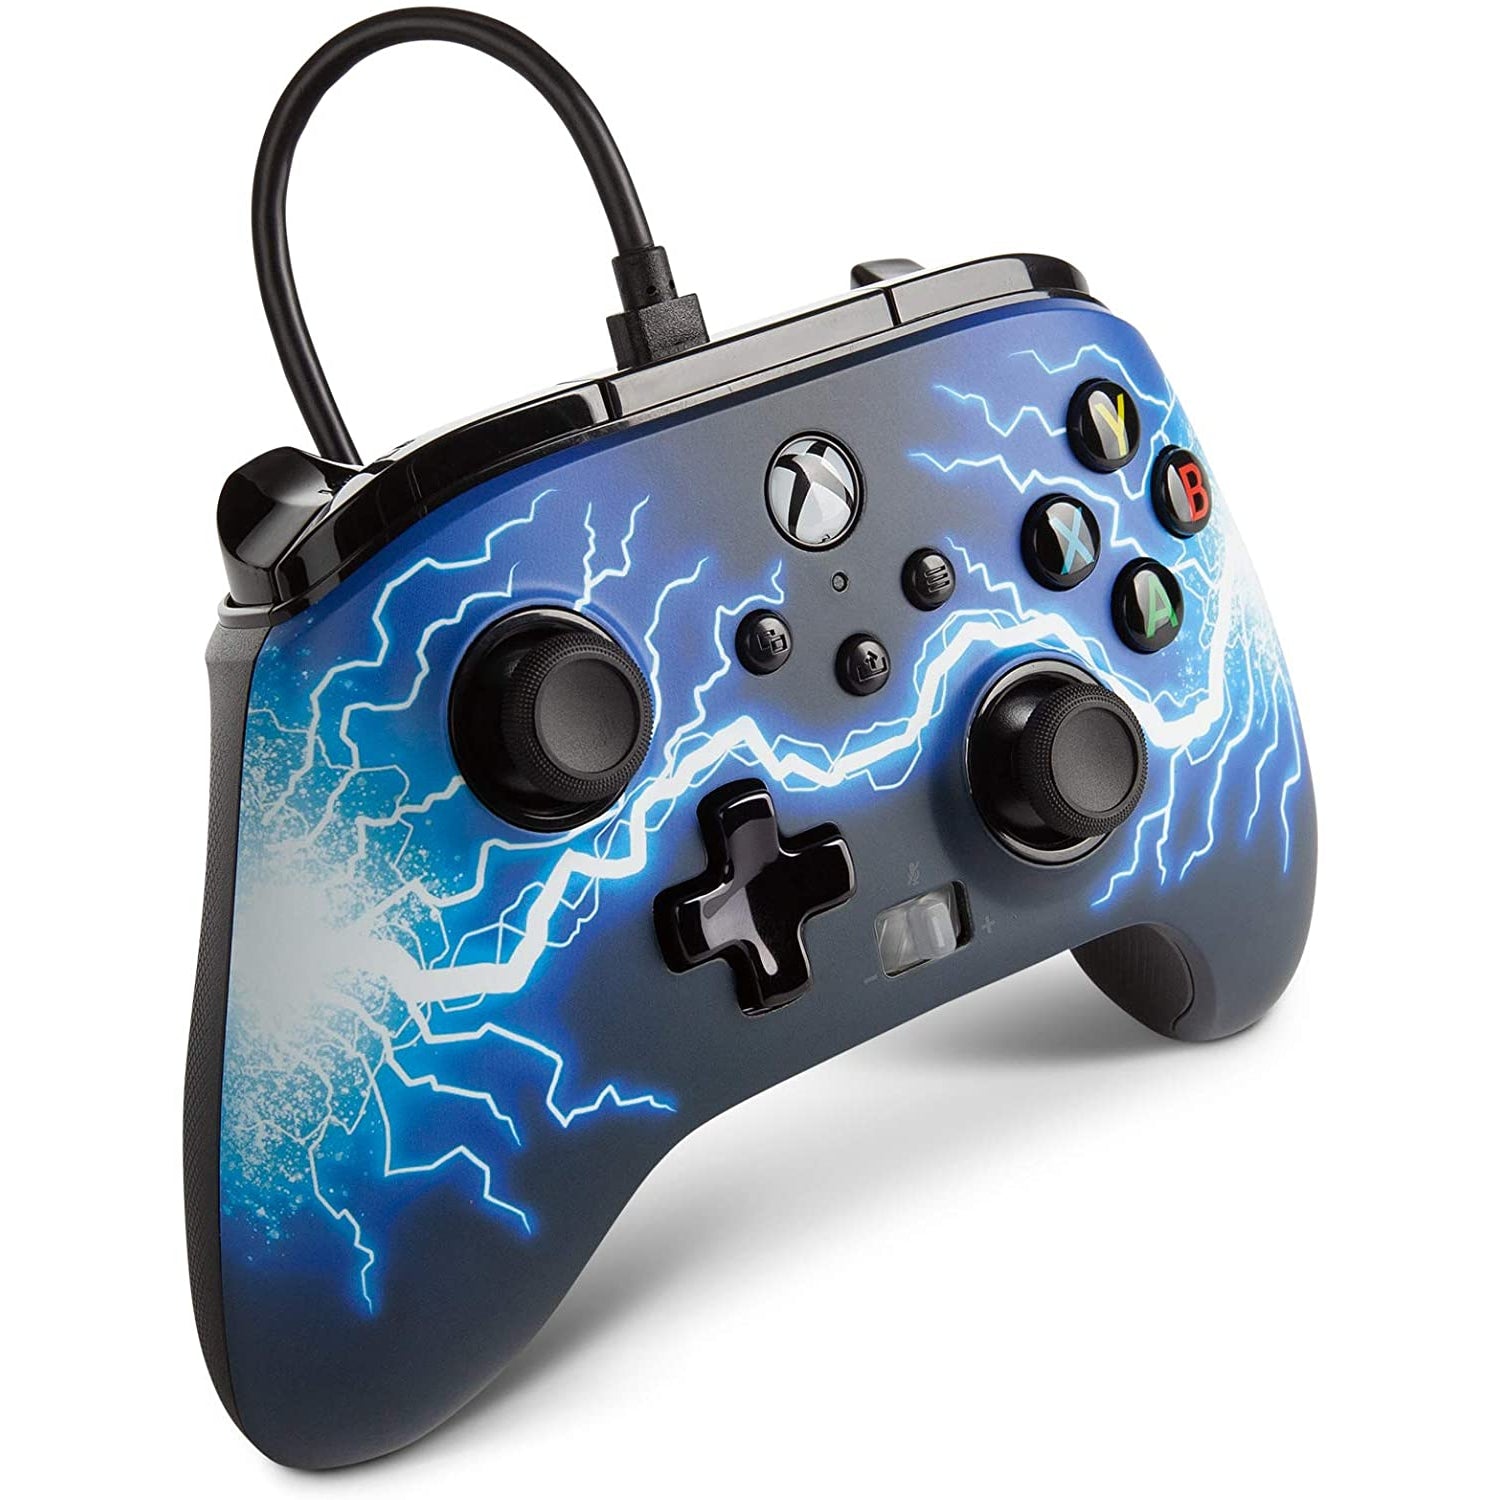 PowerA Xbox Arc Light Enhanced Wired Controller - Blue